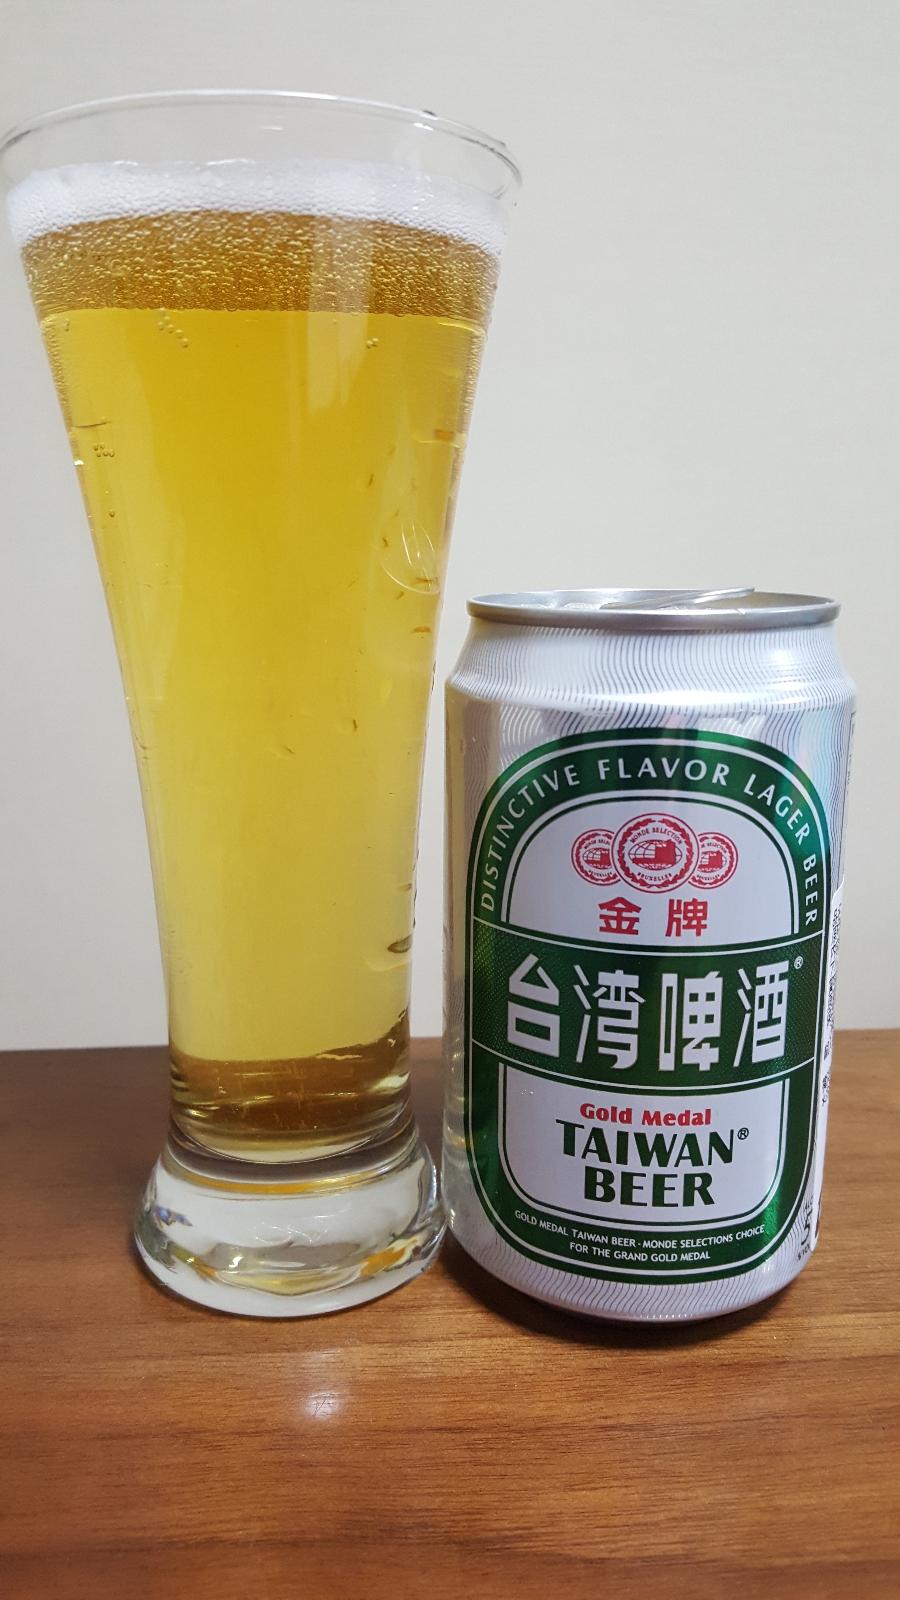 Taiwan Beer Gold Medal